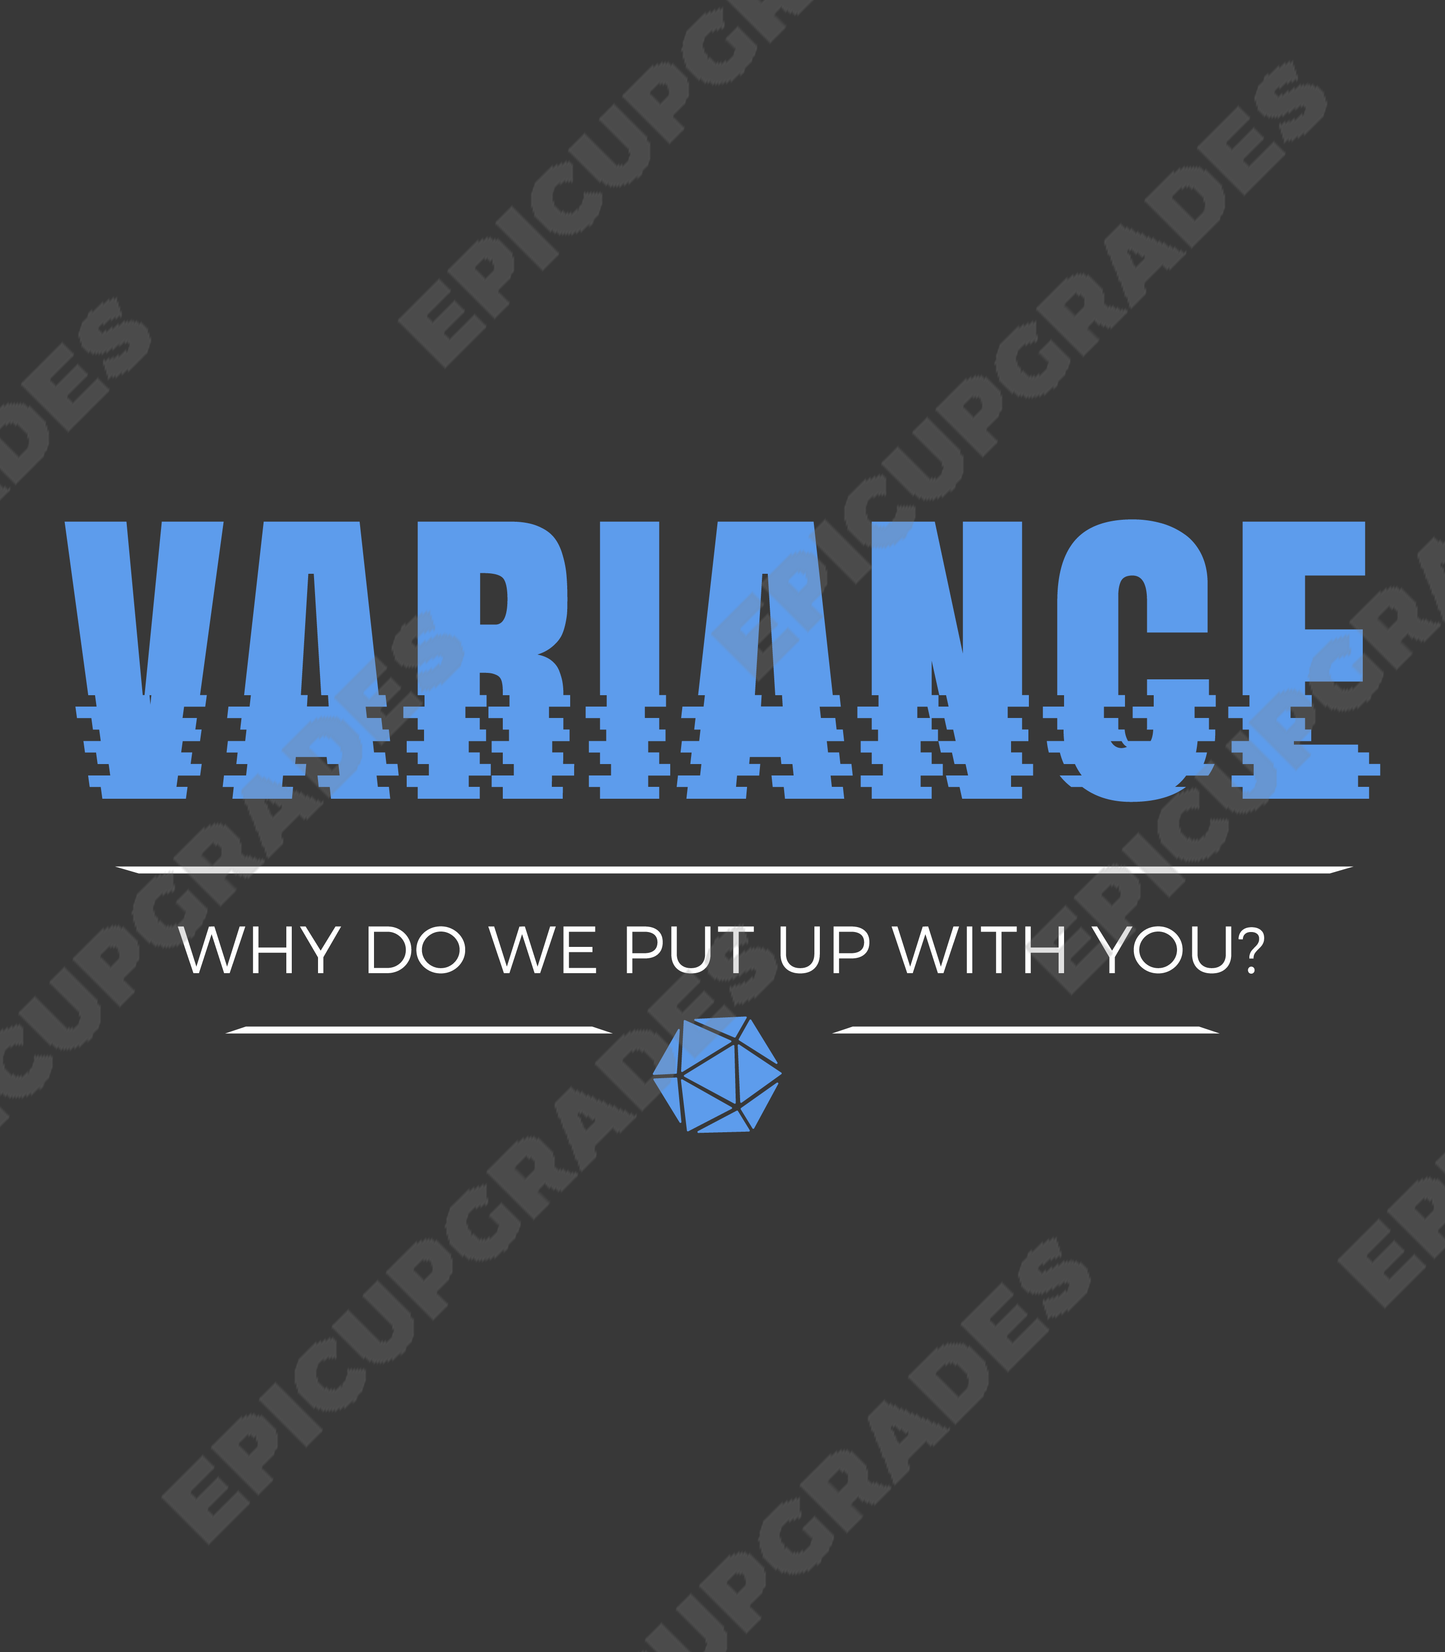 Variance - Magic the Gathering Unisex T-Shirt - epicupgrades